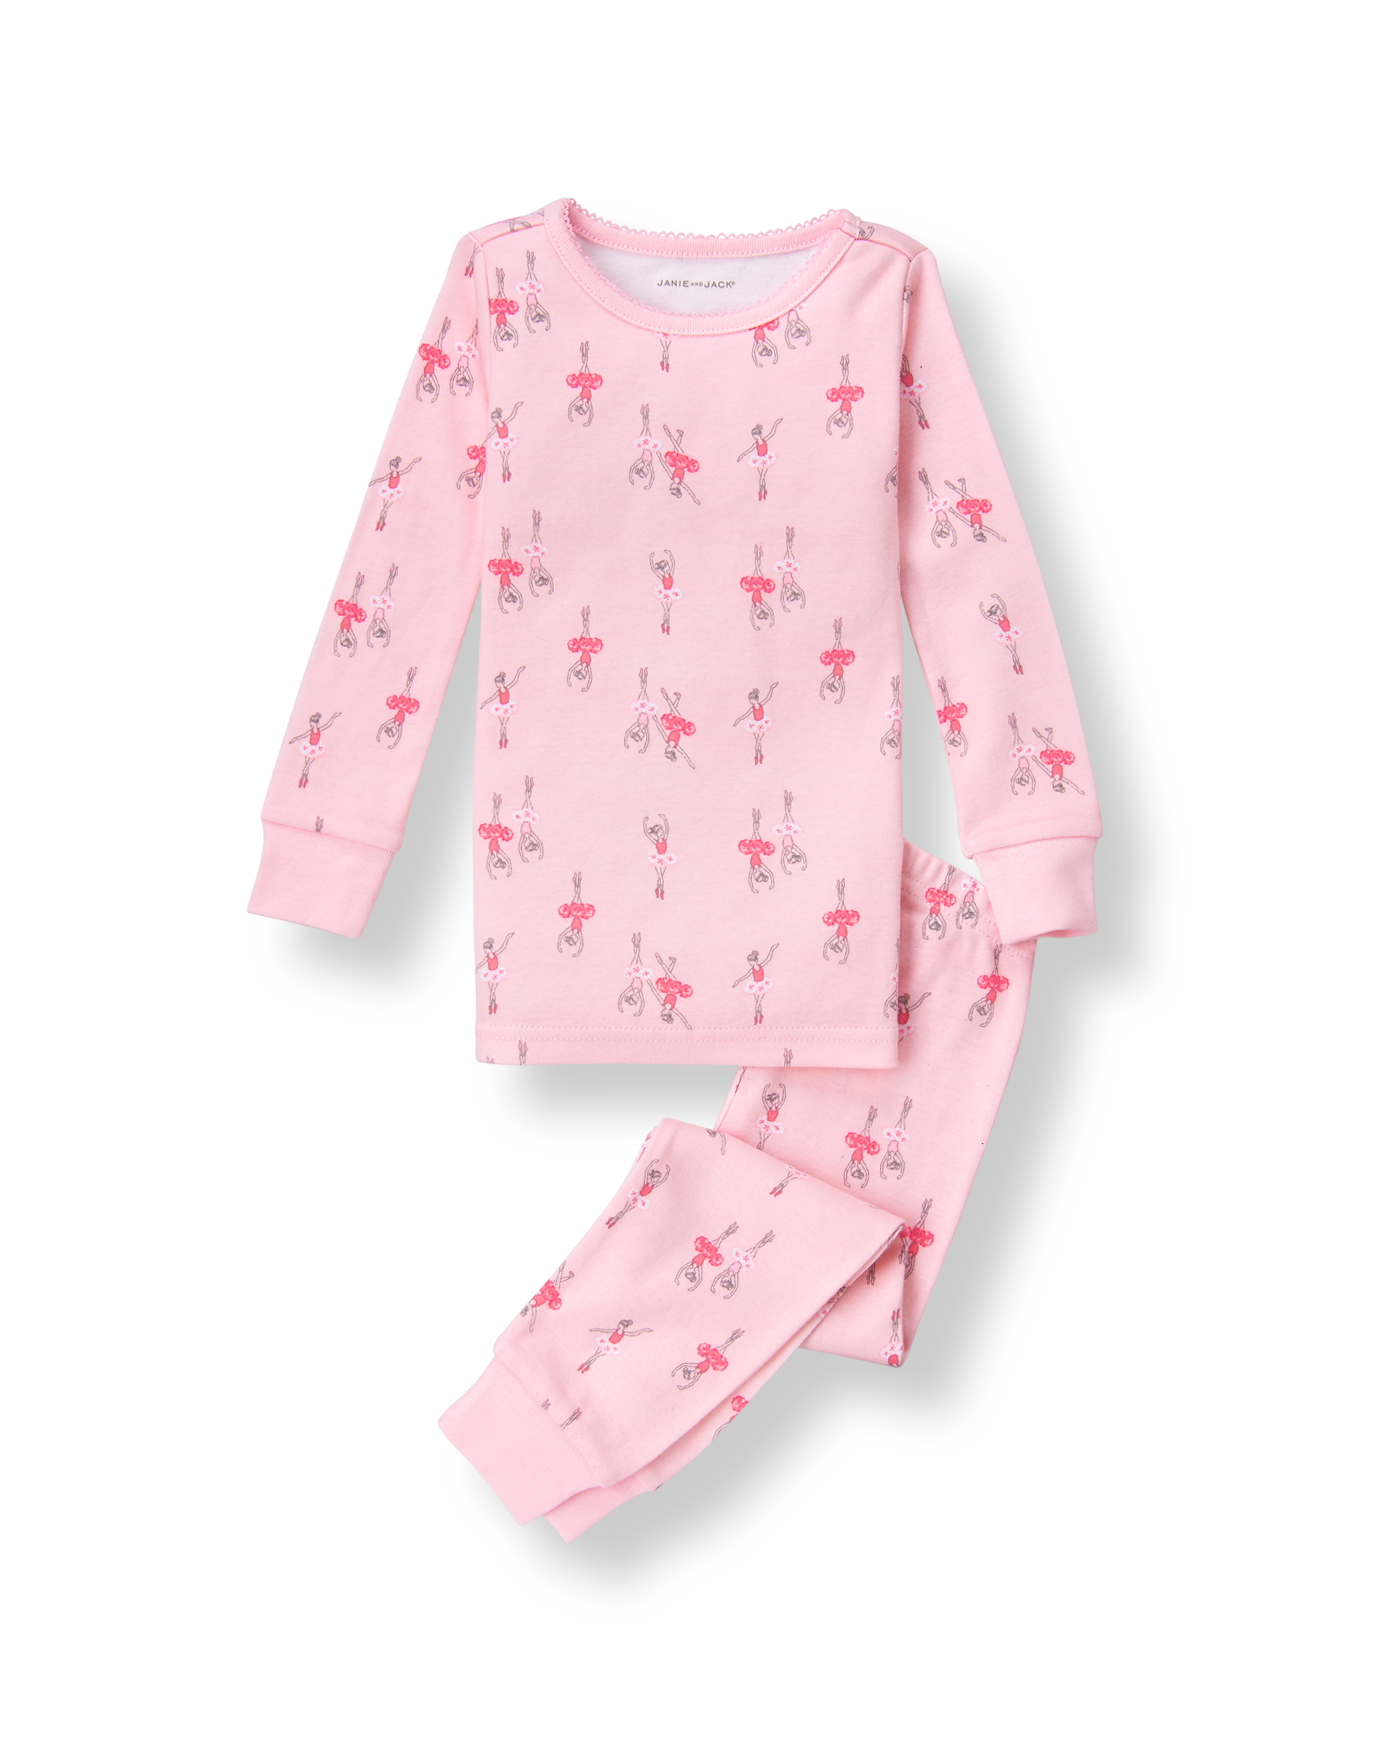  Ballerina Pajamas For Girls Toddler Kids 100% Cotton Pjs 3T  Children Pj Sets Jammies Sleepwear Clothes Size 3 Years Outfits Pyjamas  Shirts Pijamas Ninas